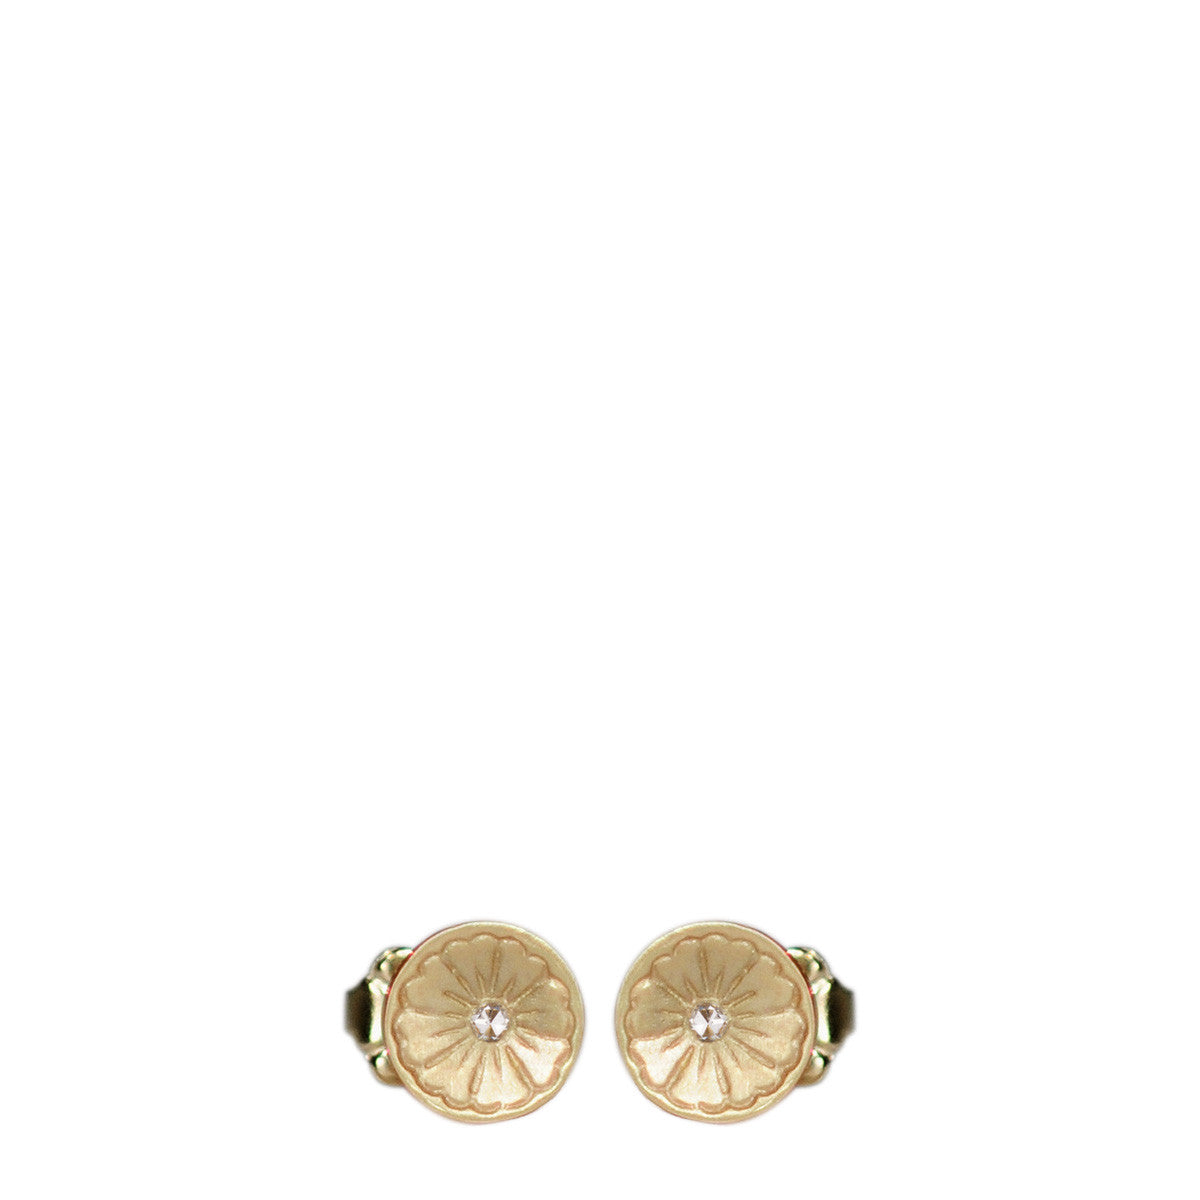 10K Gold Engraved Flower Stud Earrings with Diamonds